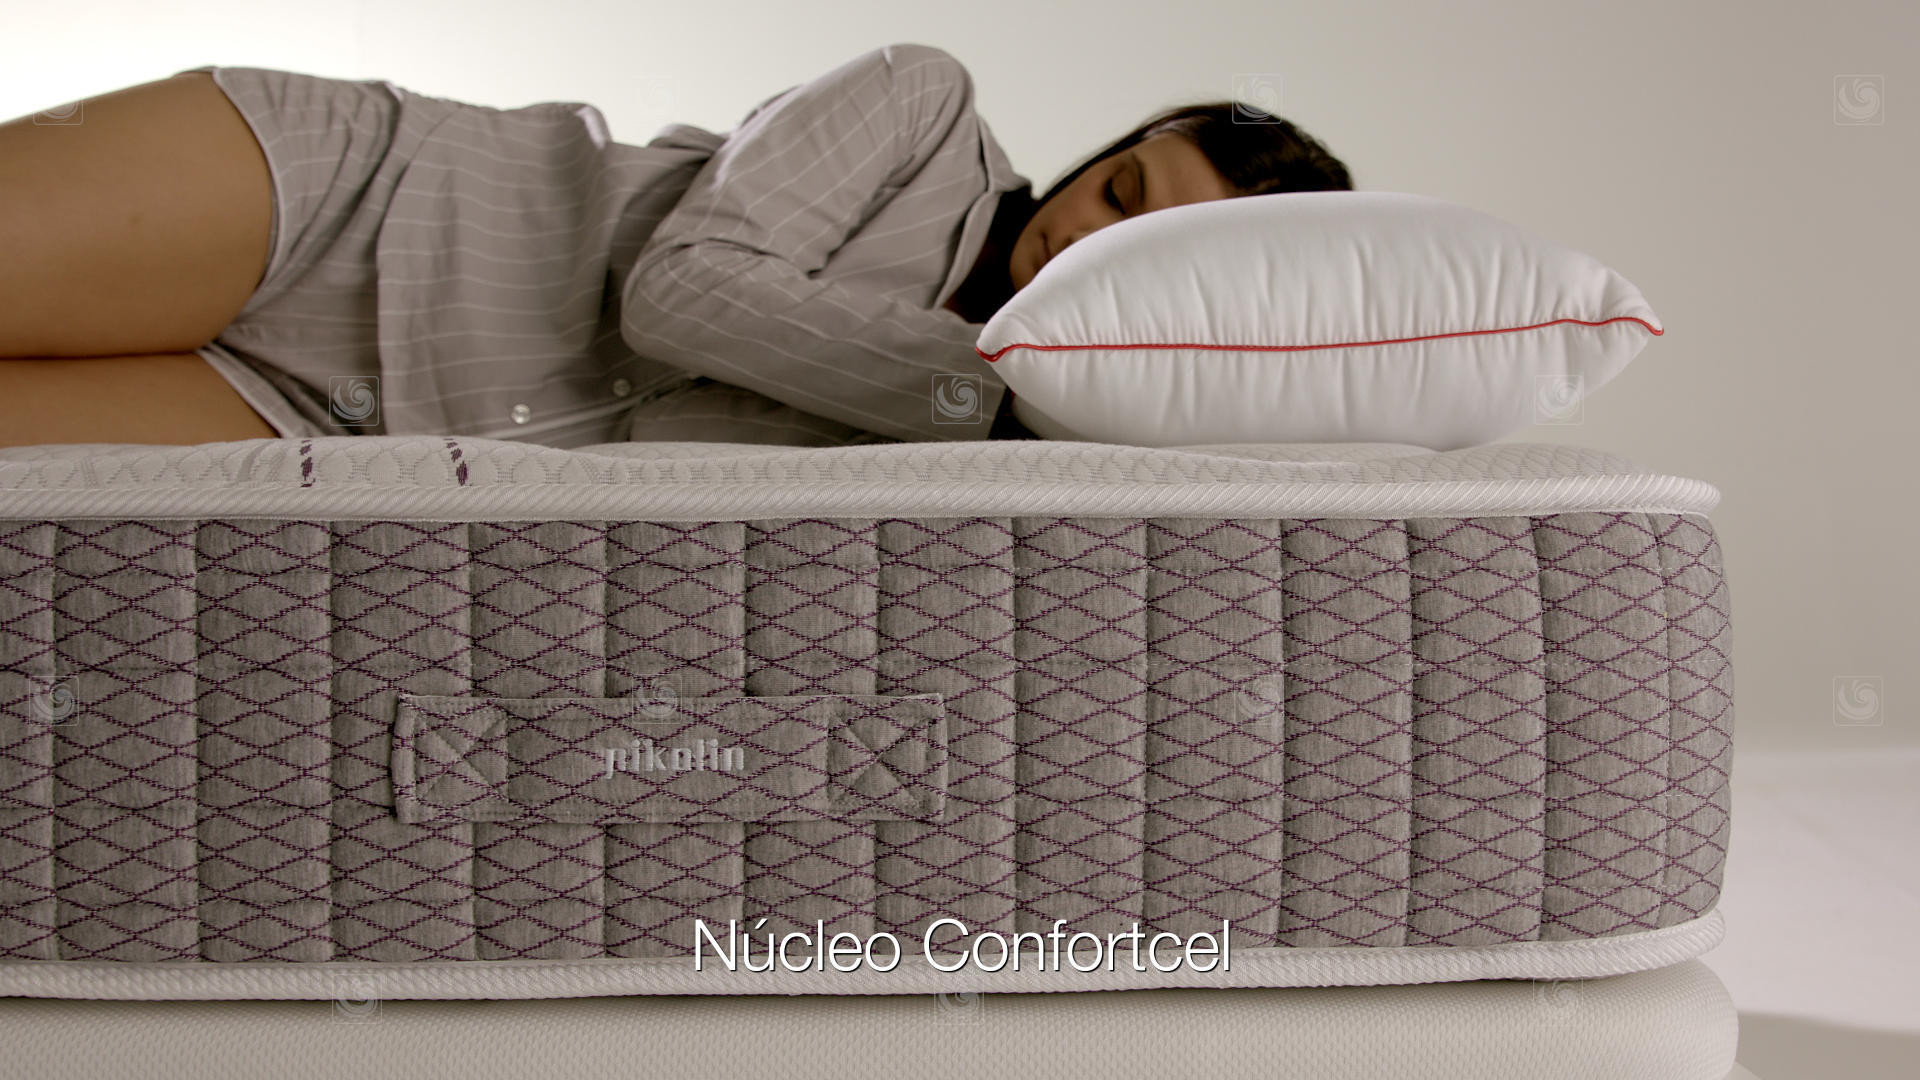 Fotograma de vídeo de producto para Pikolin, mostrando la postura correcta de descanso sobre un colchón